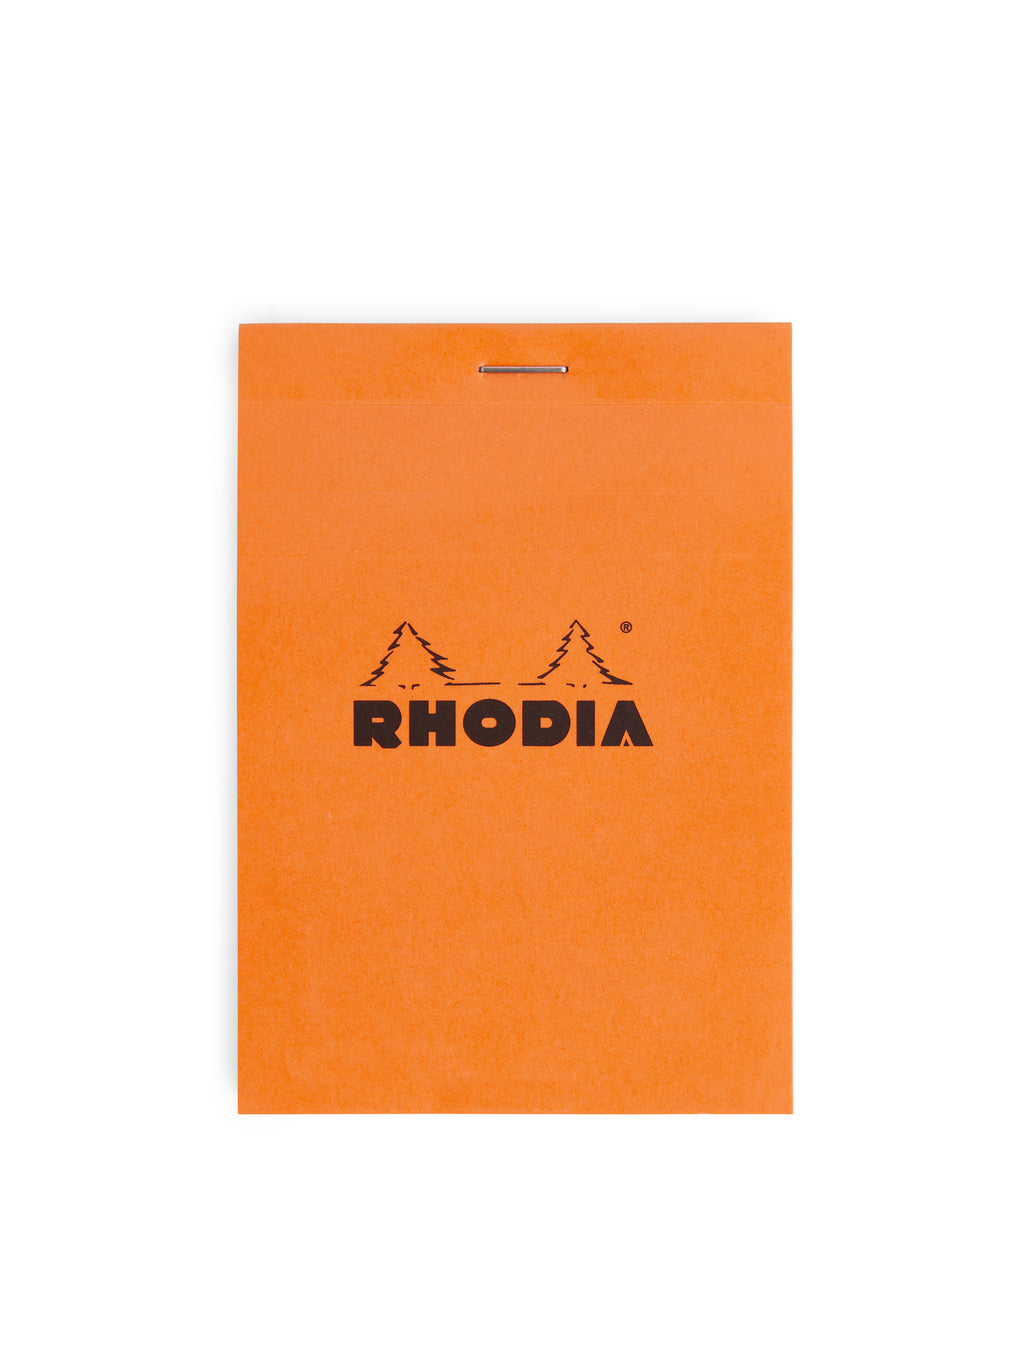 Rhodia Notepads Orange cover